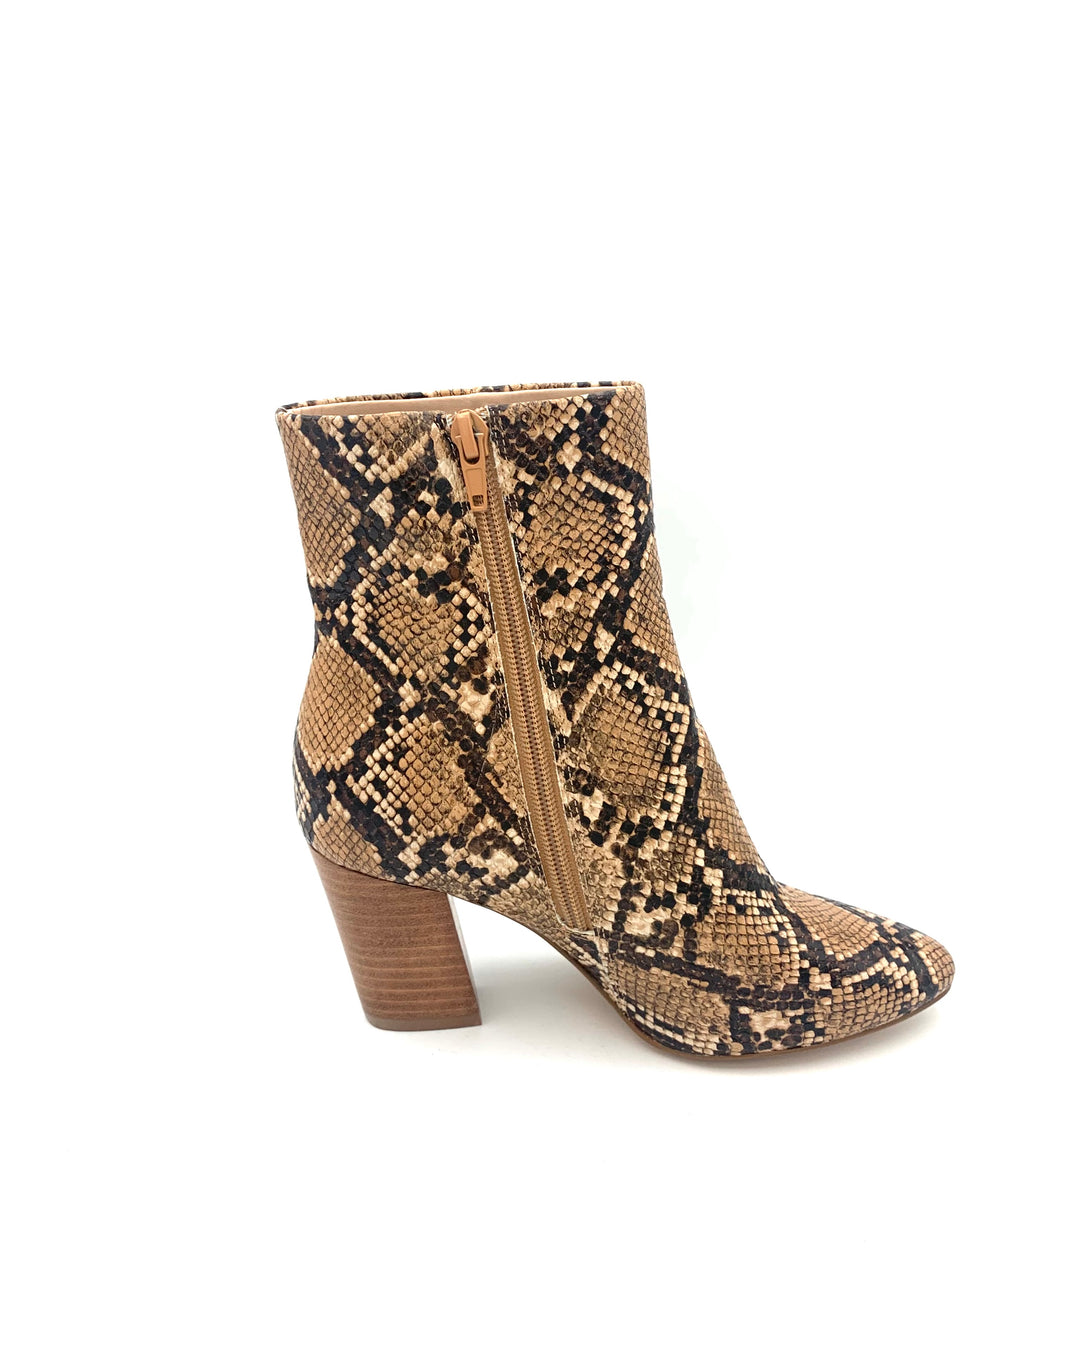 Snake Skin Heeled Boots - Size 6